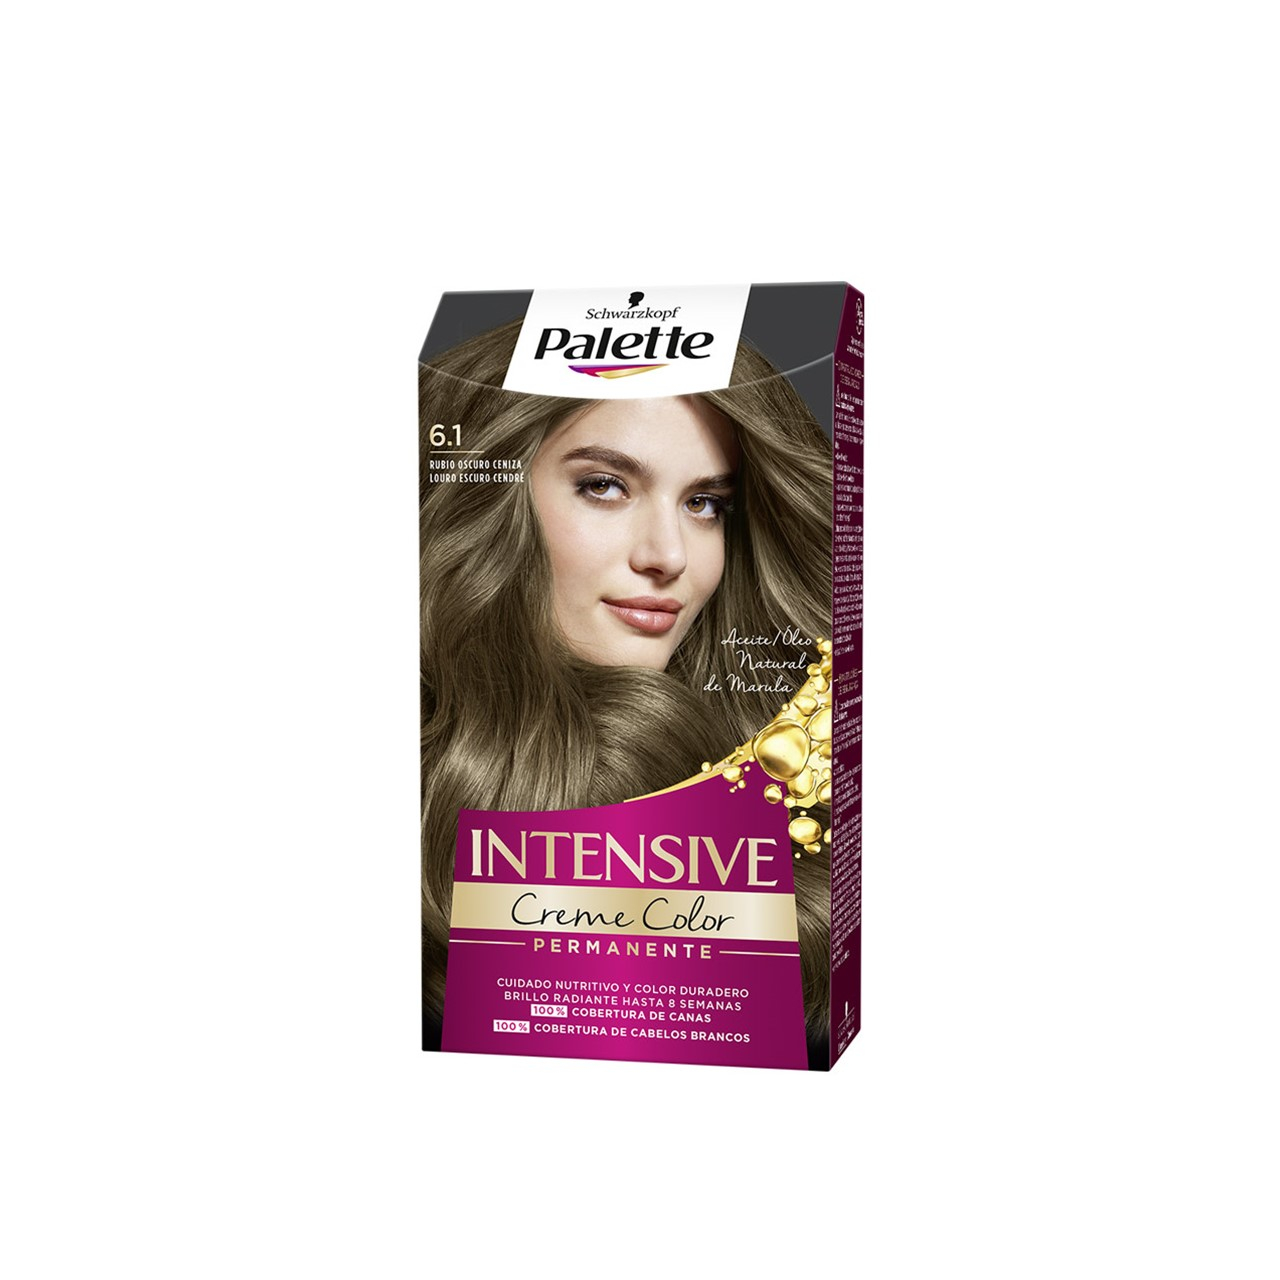 Schwarzkopf Palette Intensive Creme Color Permanent Hair Dye 6.1 Ashy Dark Blonde